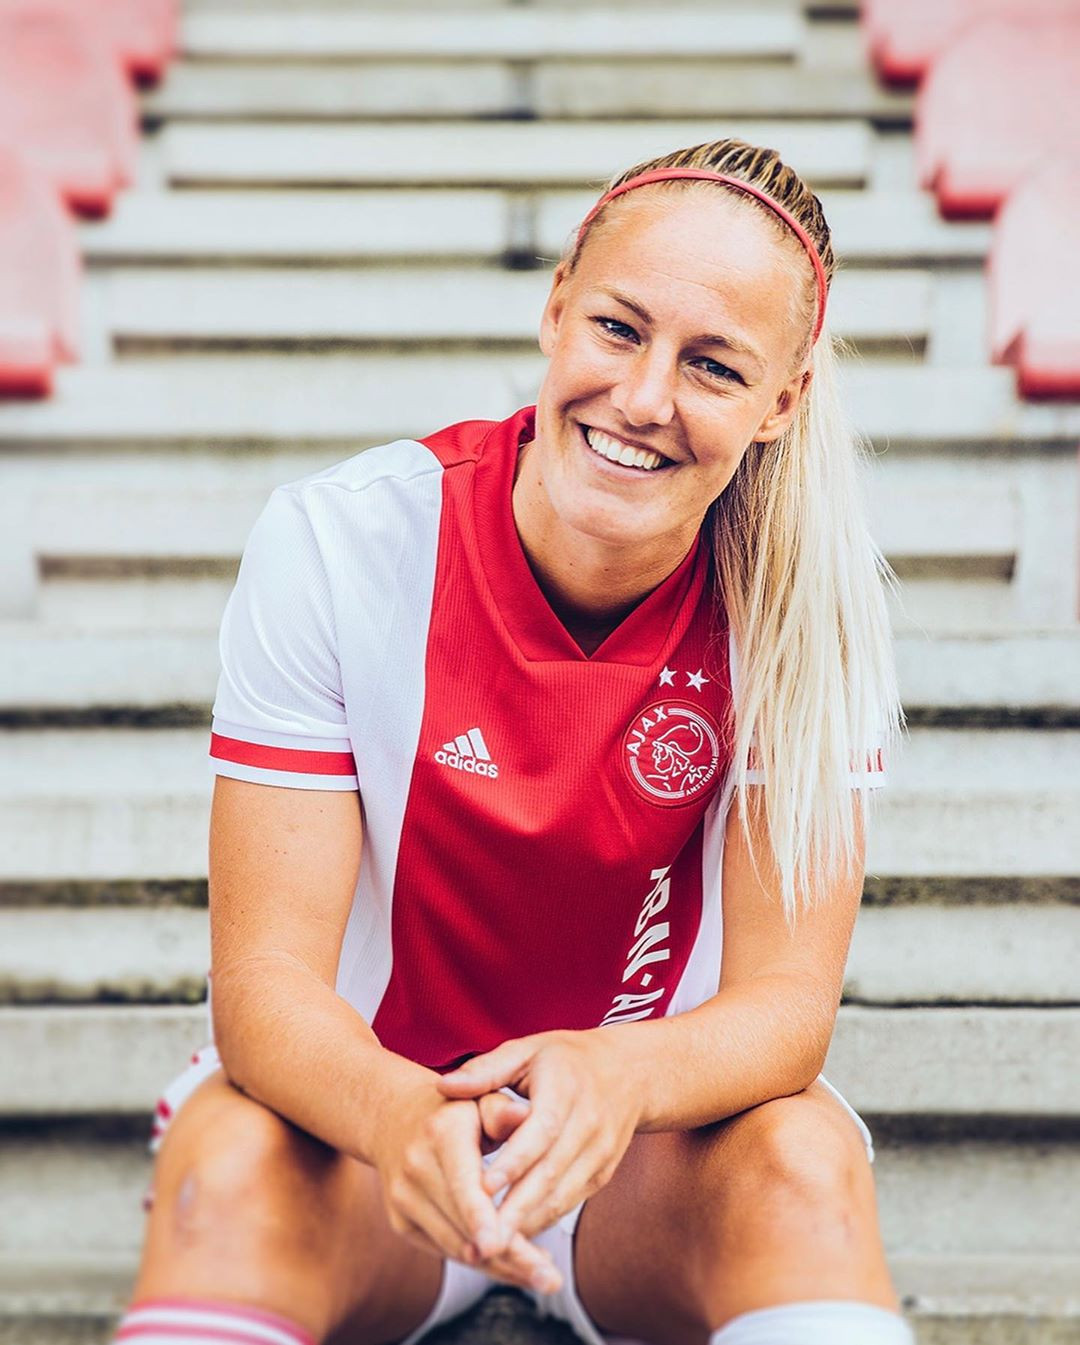 tong dek krater Ajax vrouwen voetbalshirt 2020-2021 - Voetbalshirts.com